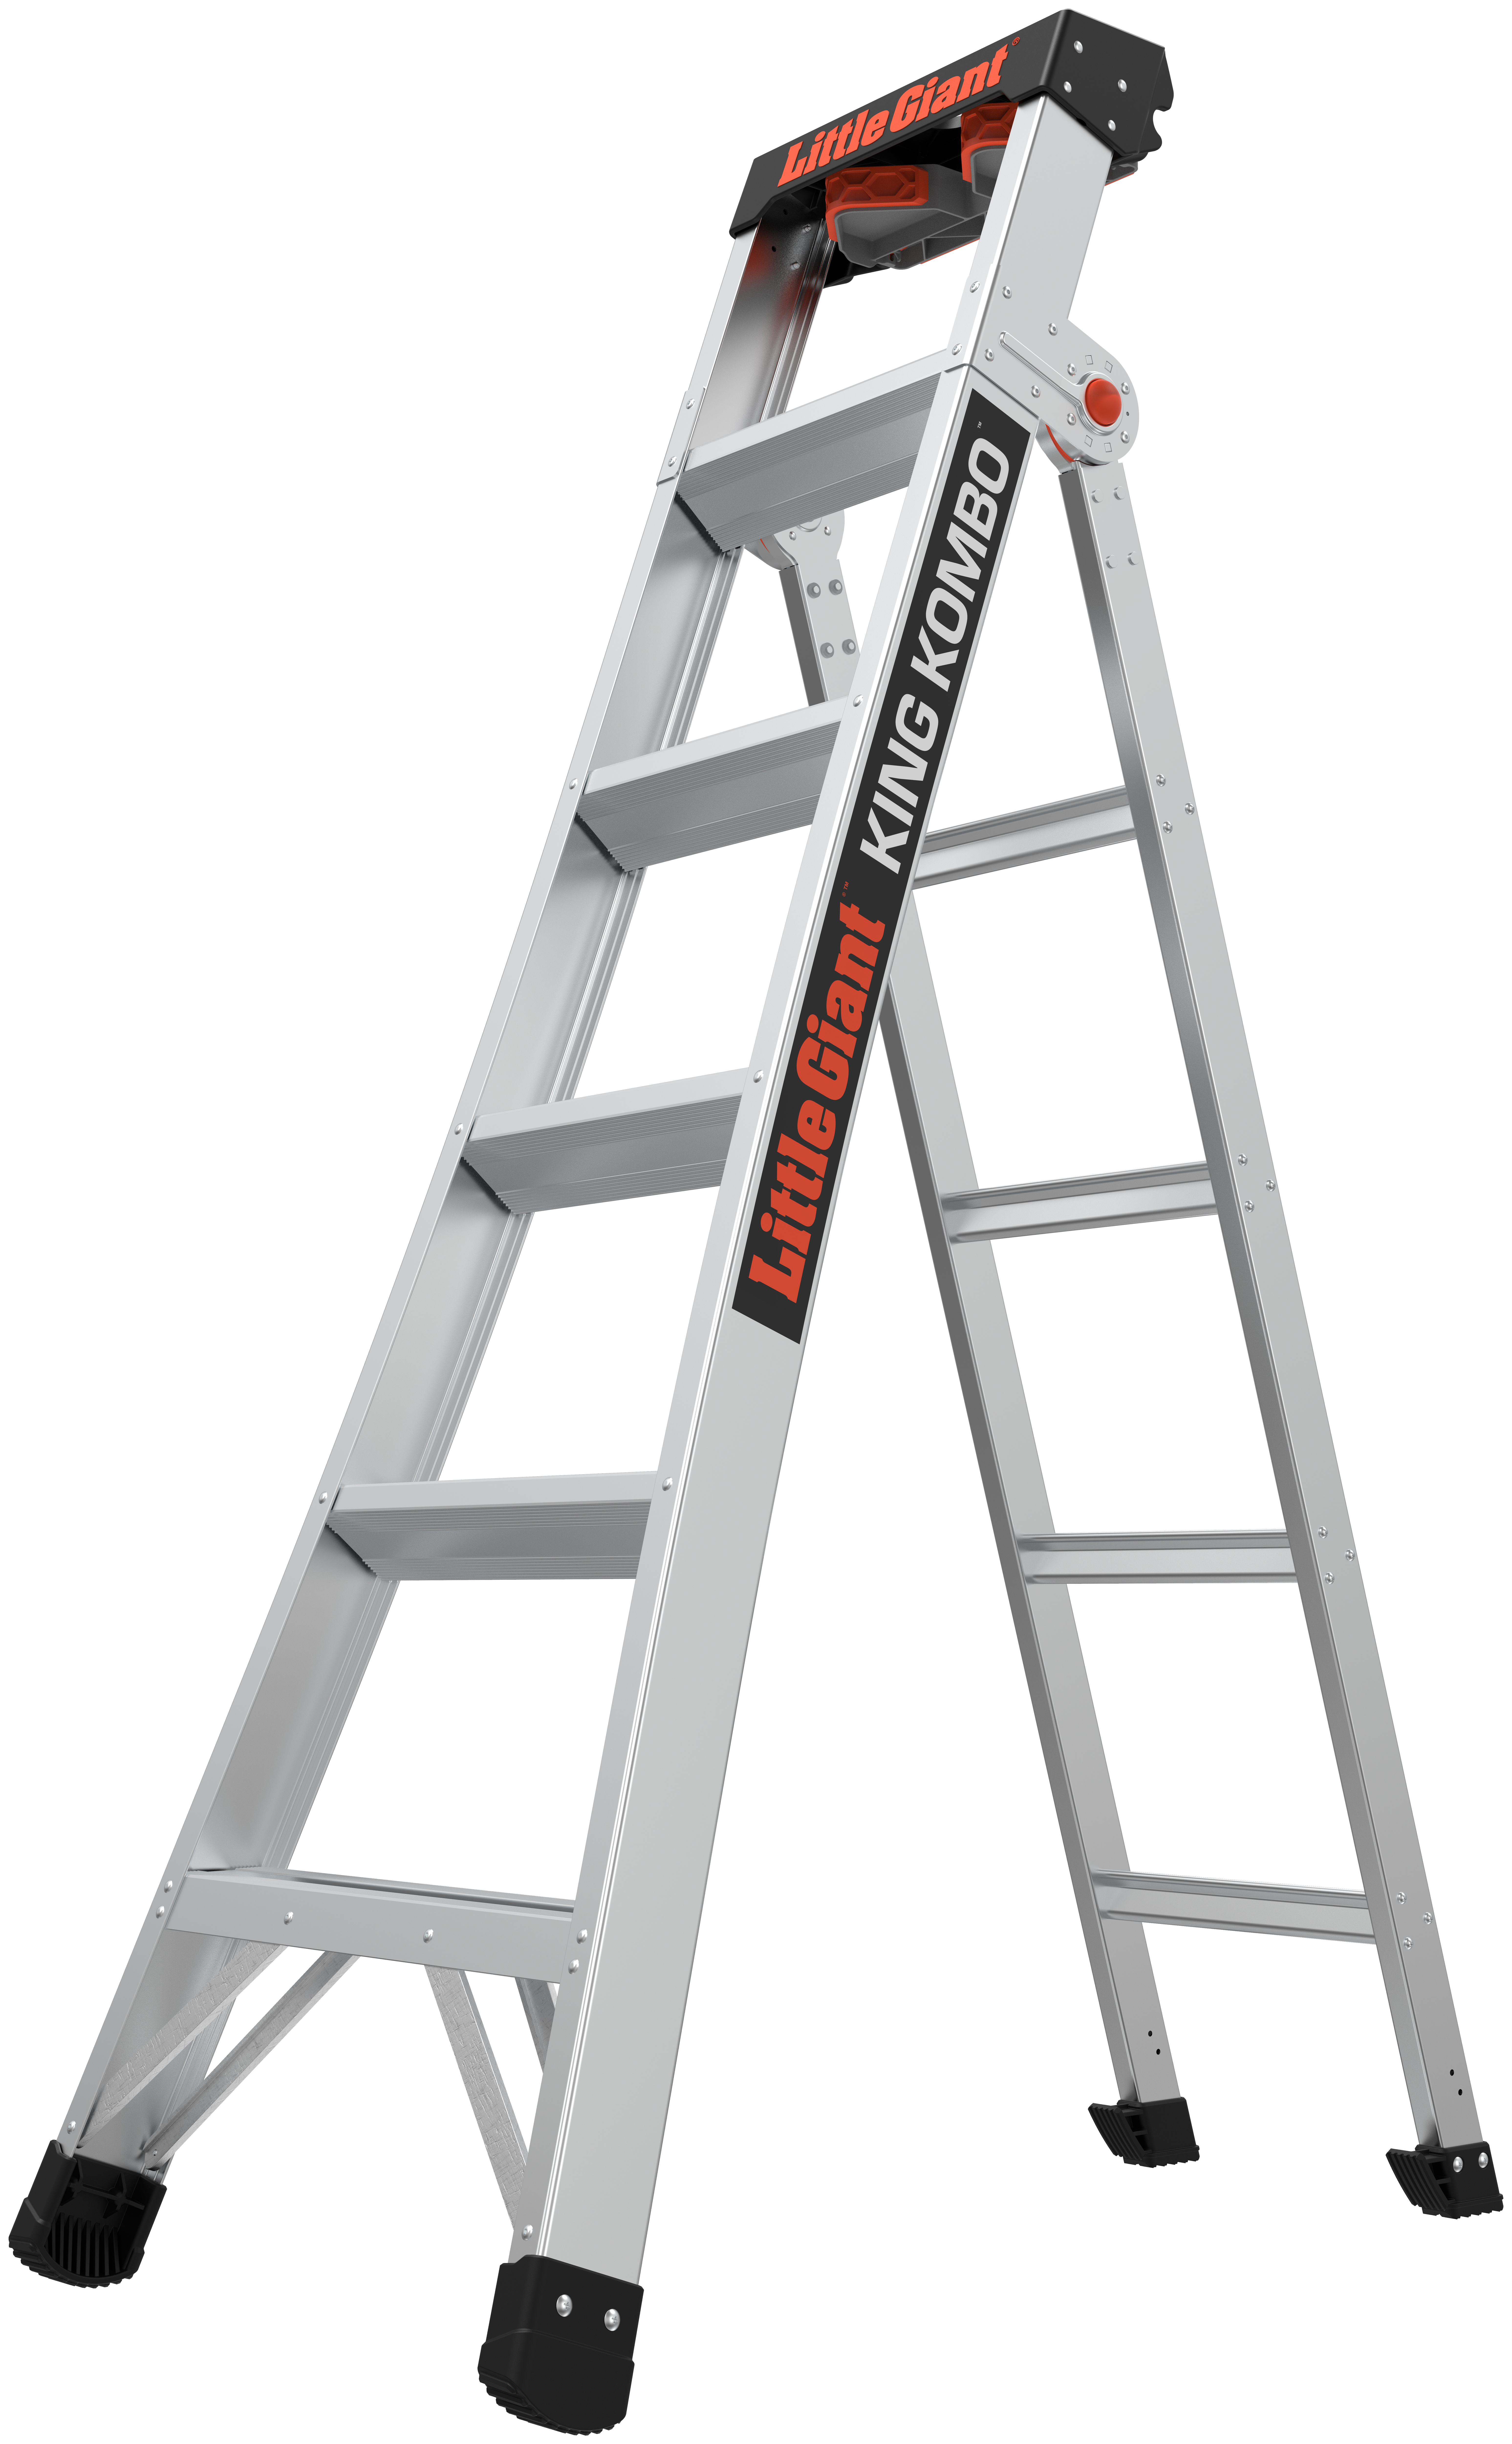 Little Giant 6 Tread King Kombo Professional Aluminium Extension Ladder